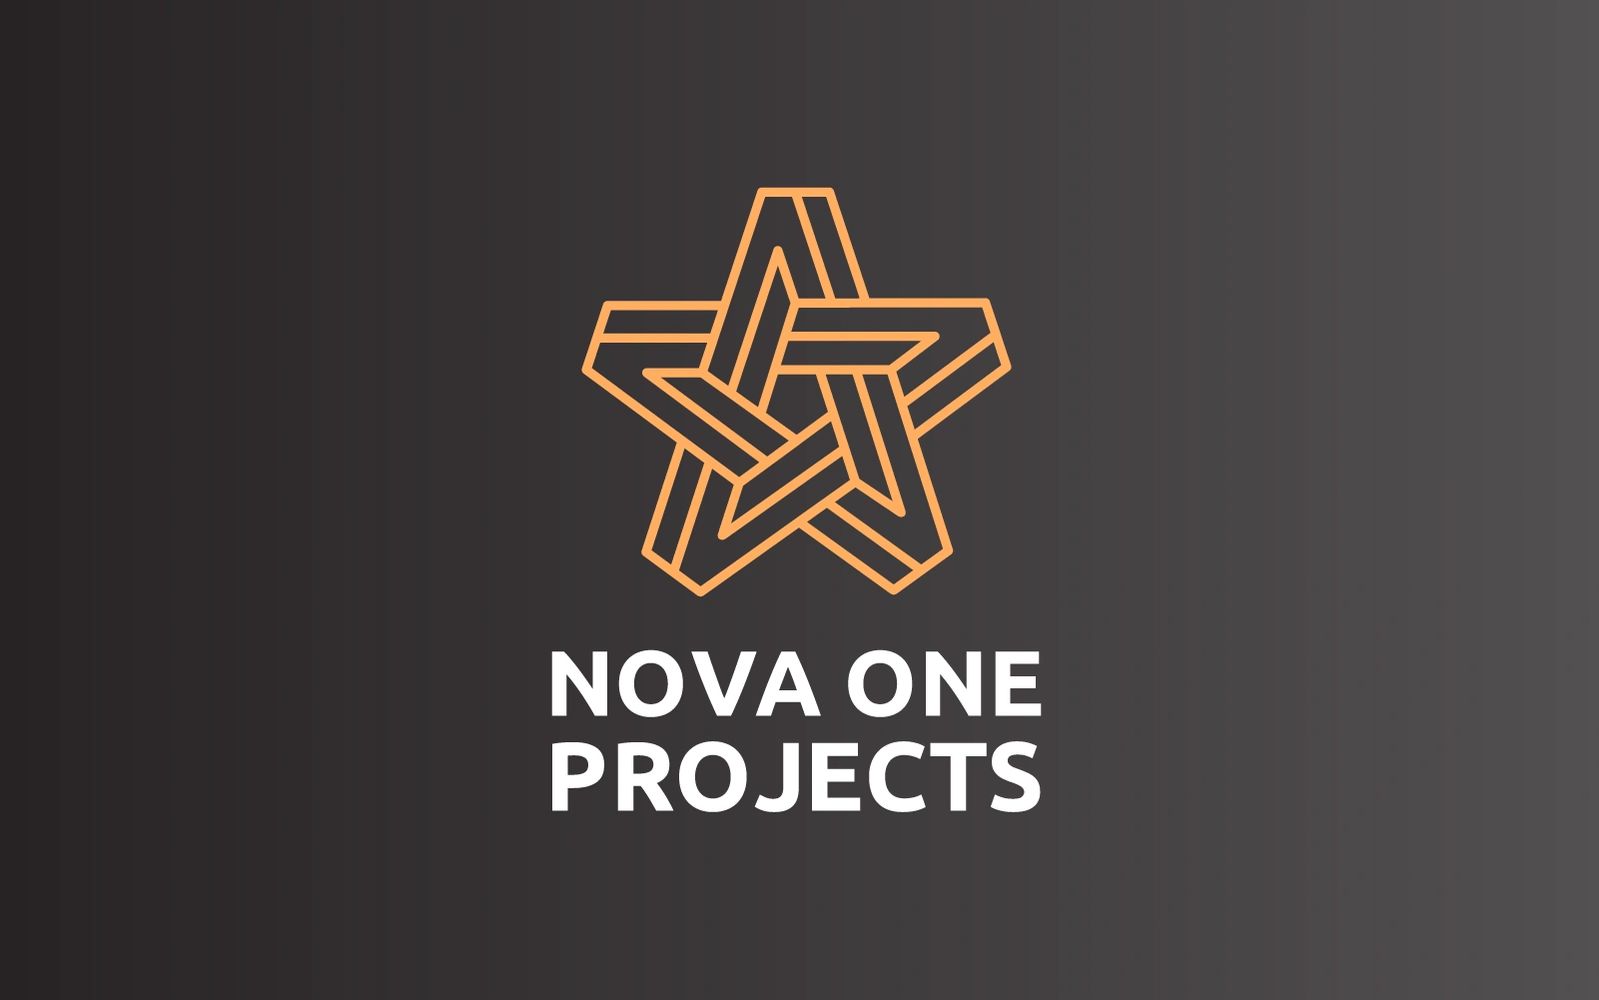 Nova one projects